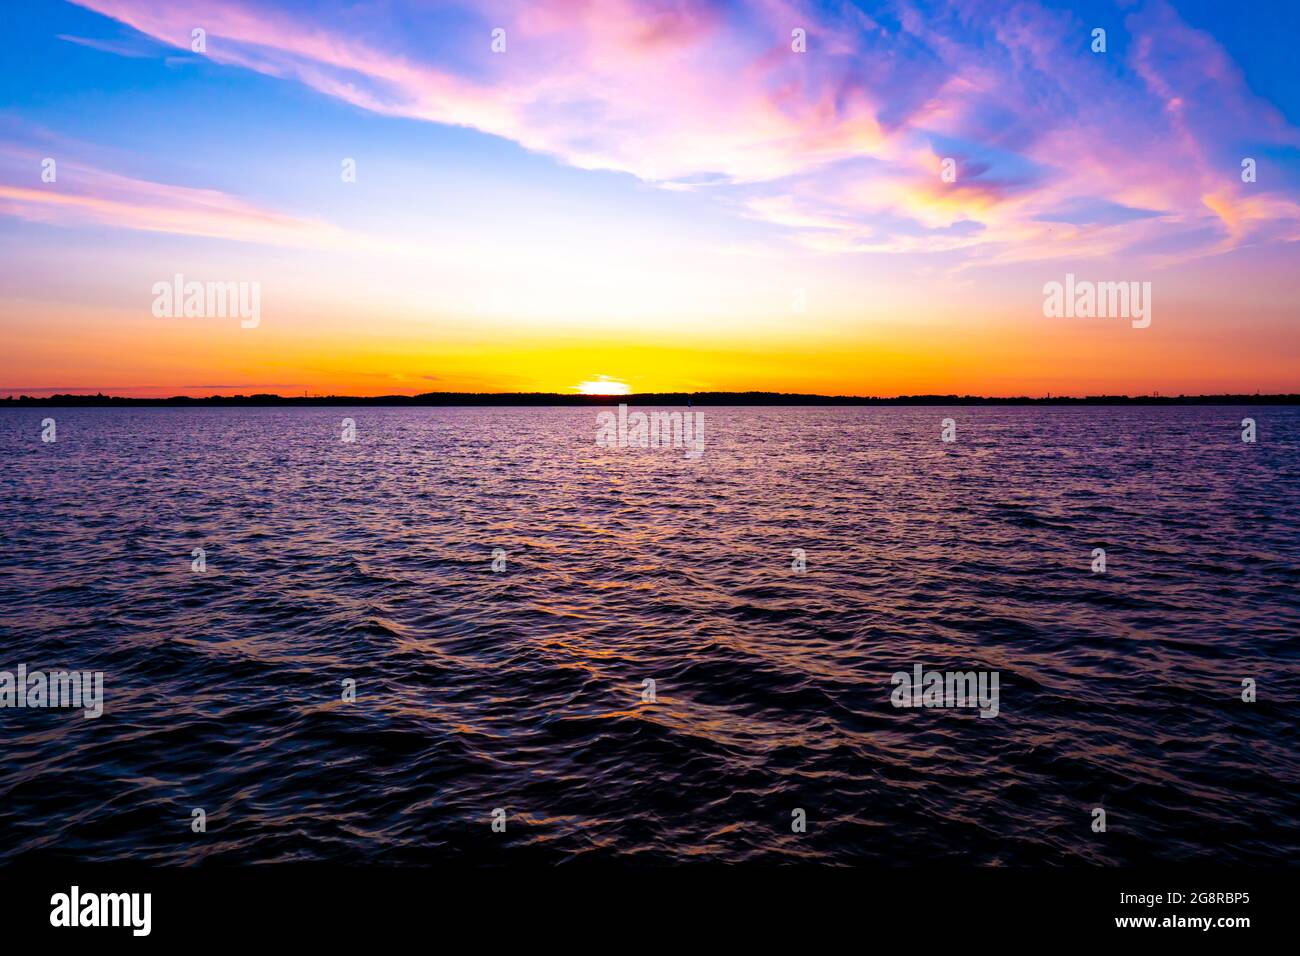 Bright beautiful sunrise or sunset at sea. Stock Photo